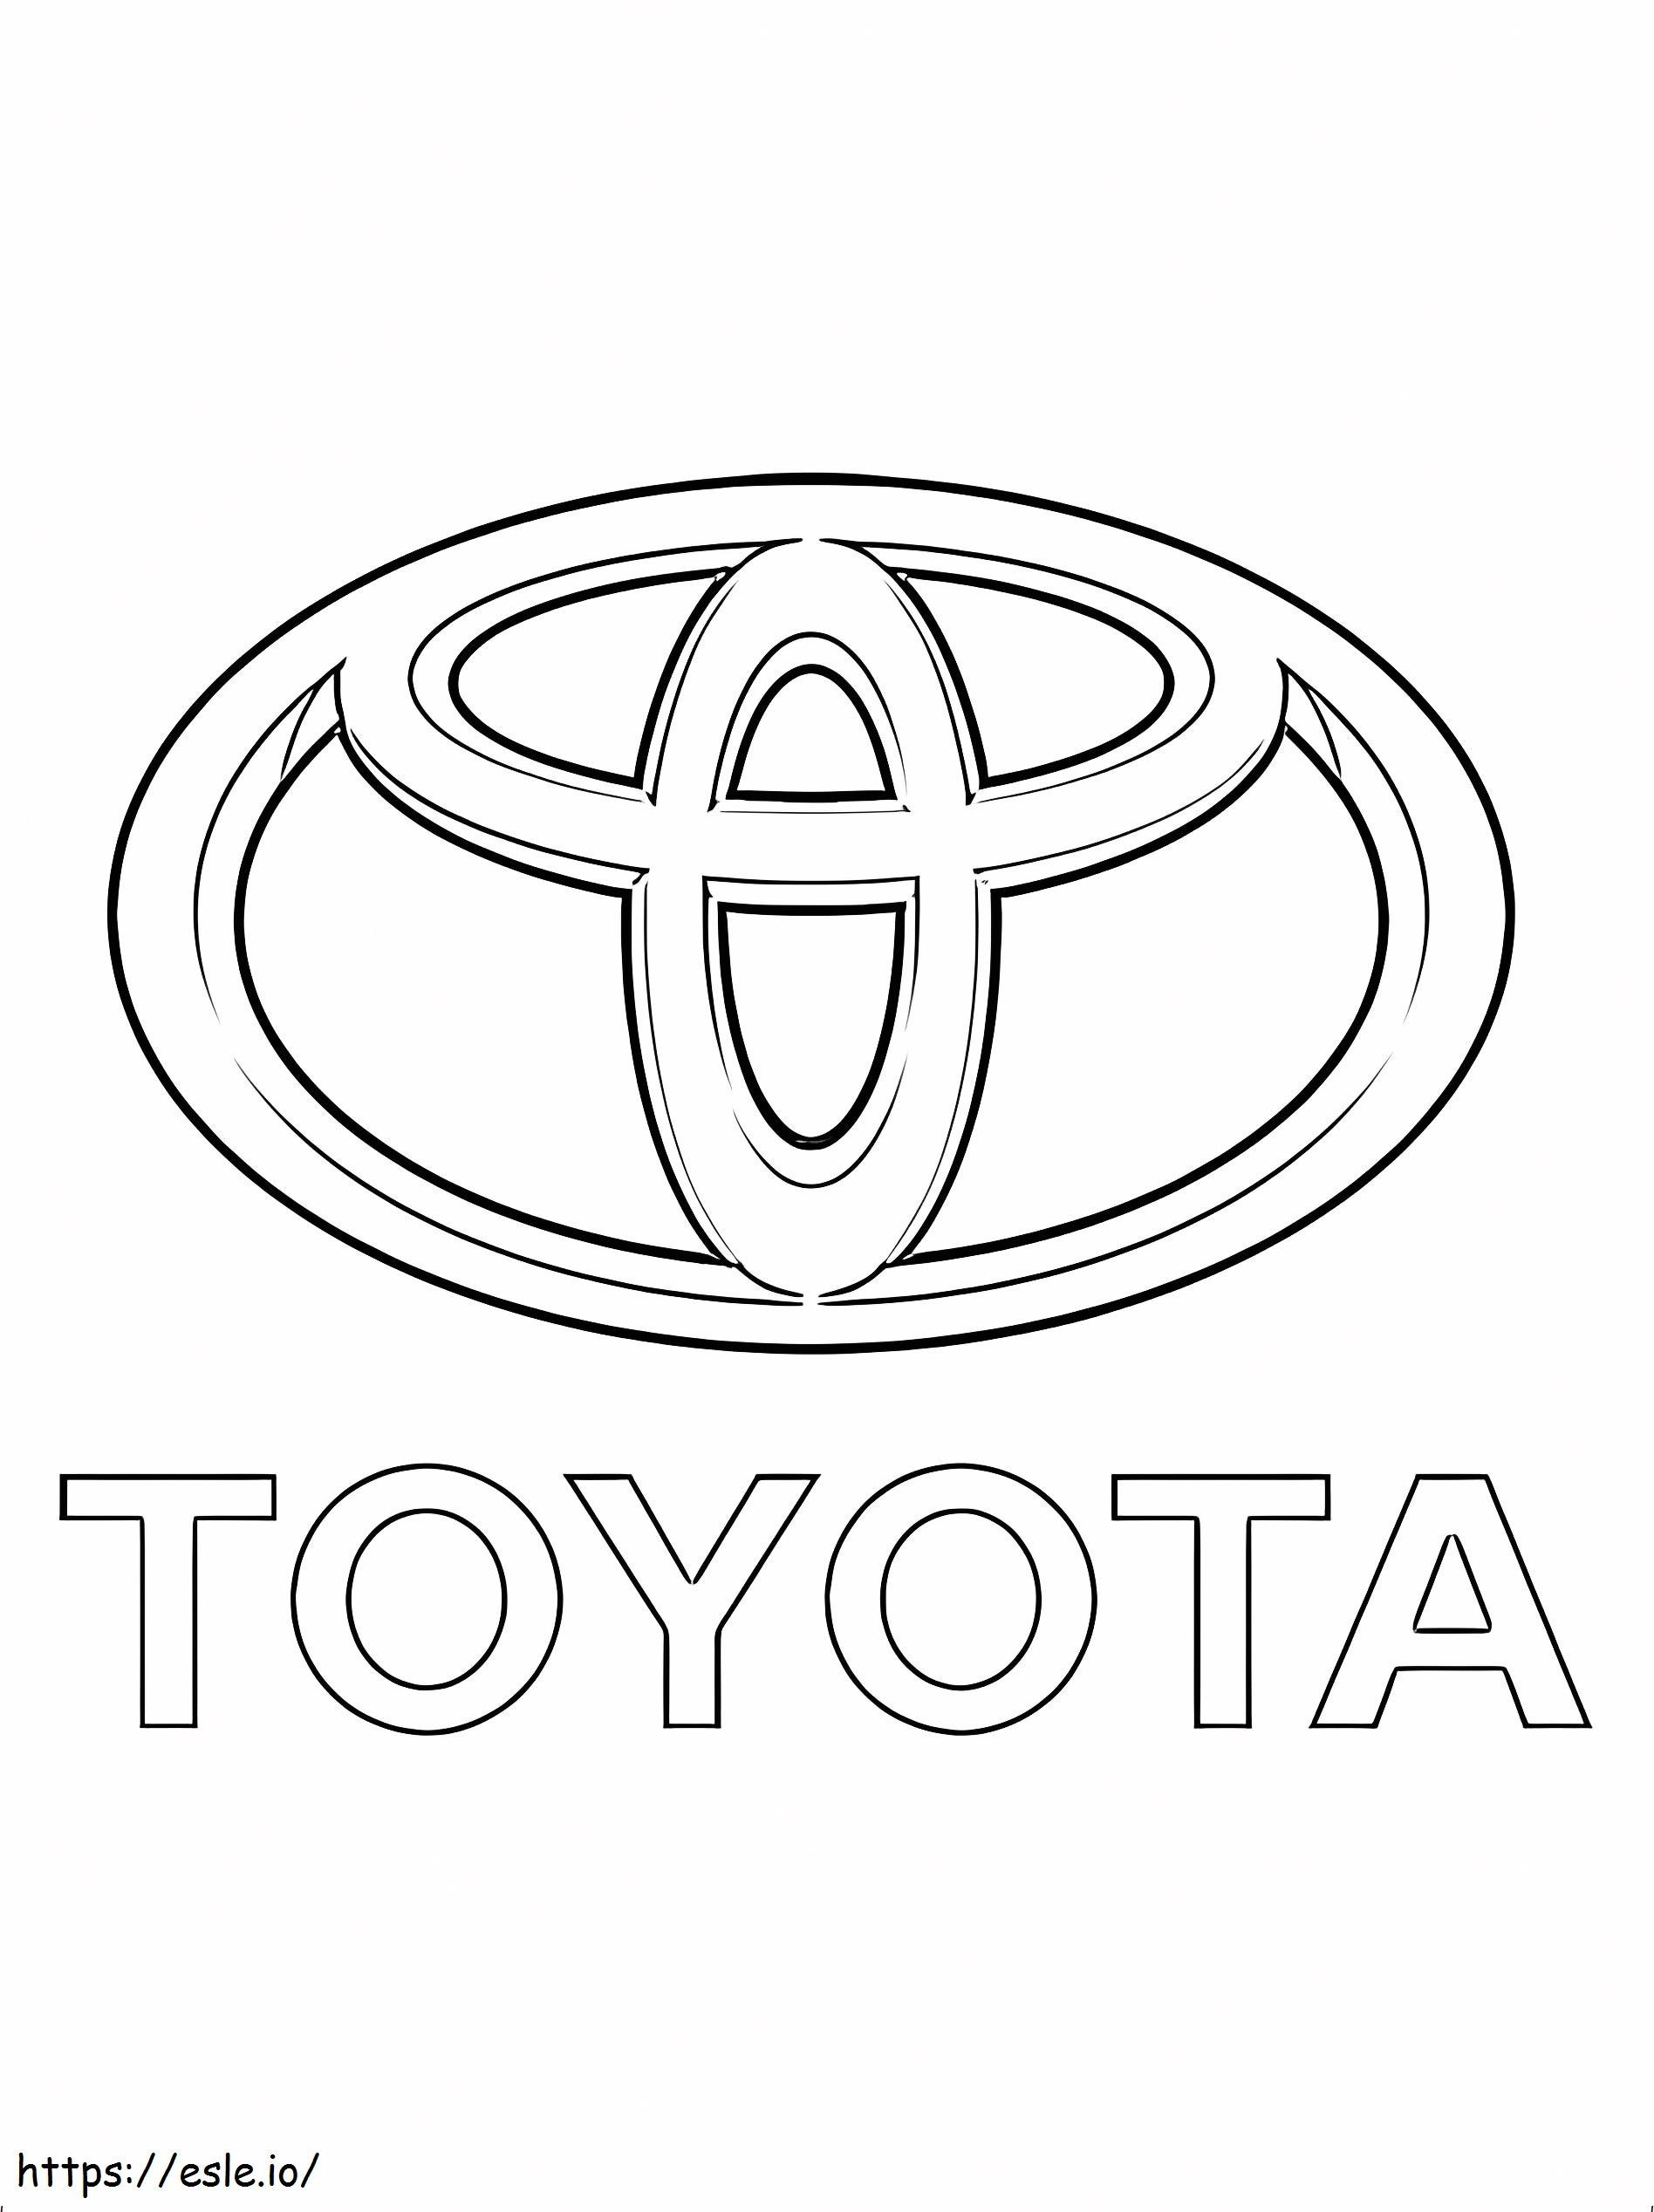 Toyota logosu boyama